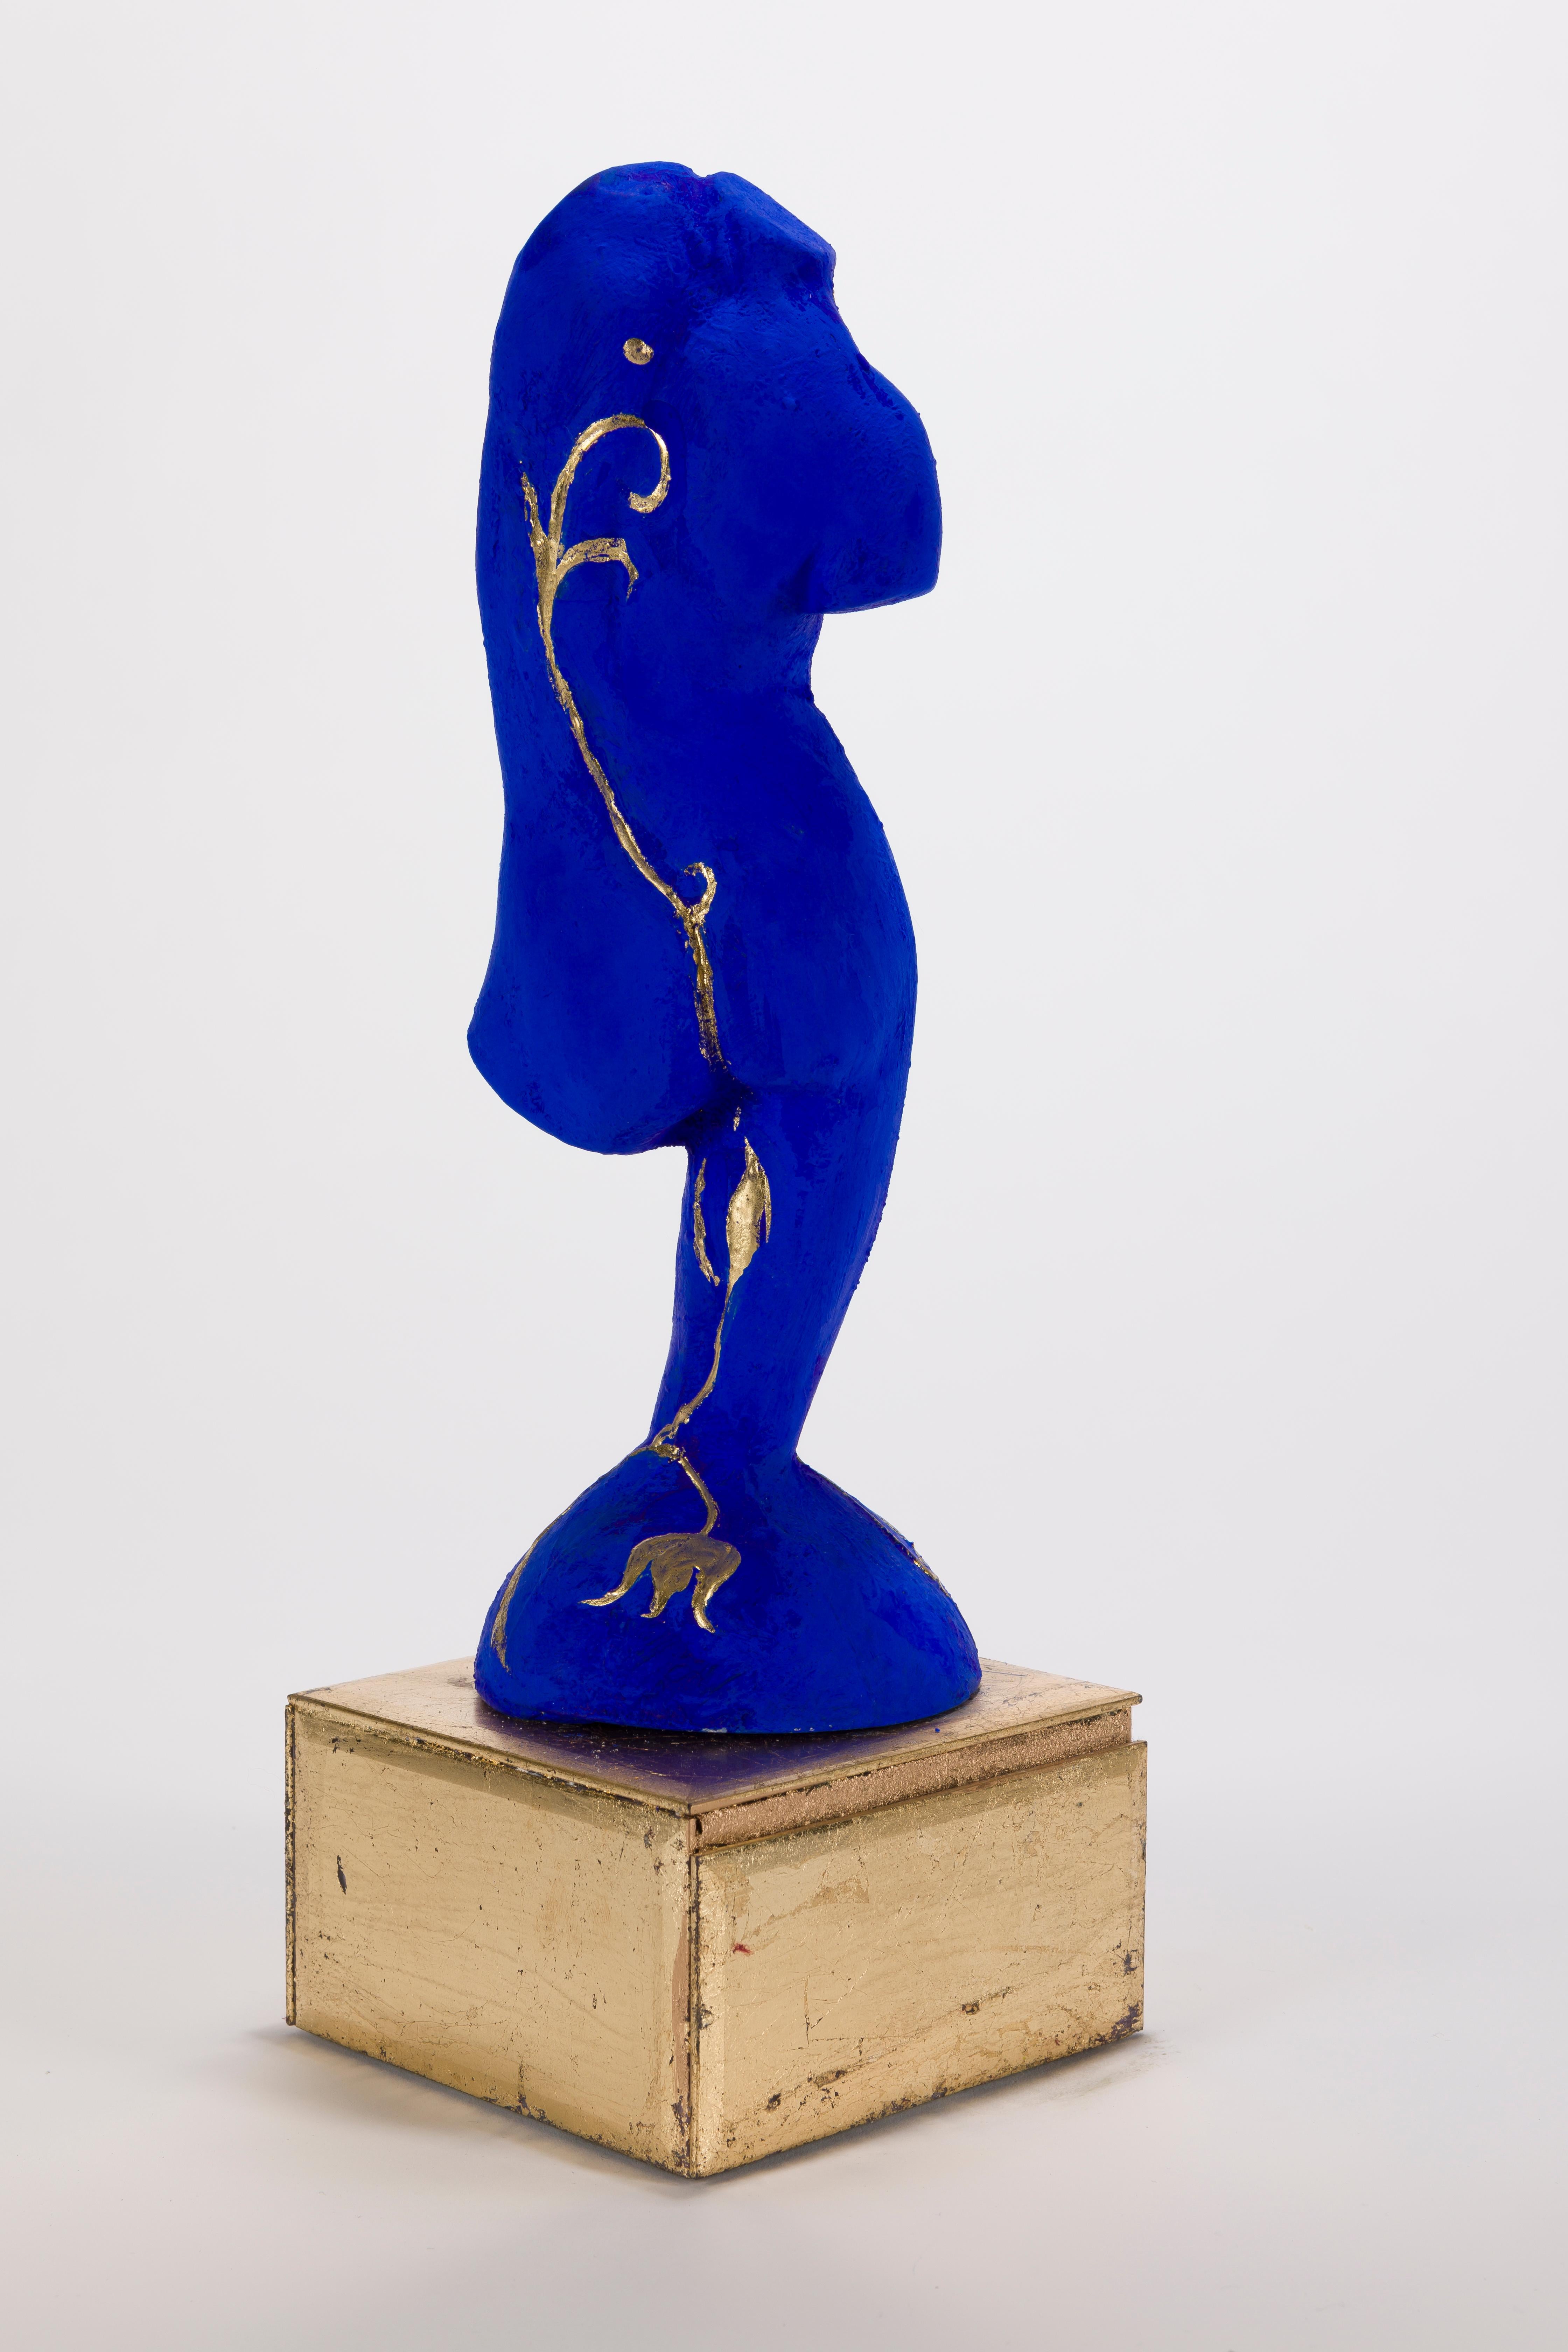 Femme nue - Sculpture de Raphaël Jaimes-Branger